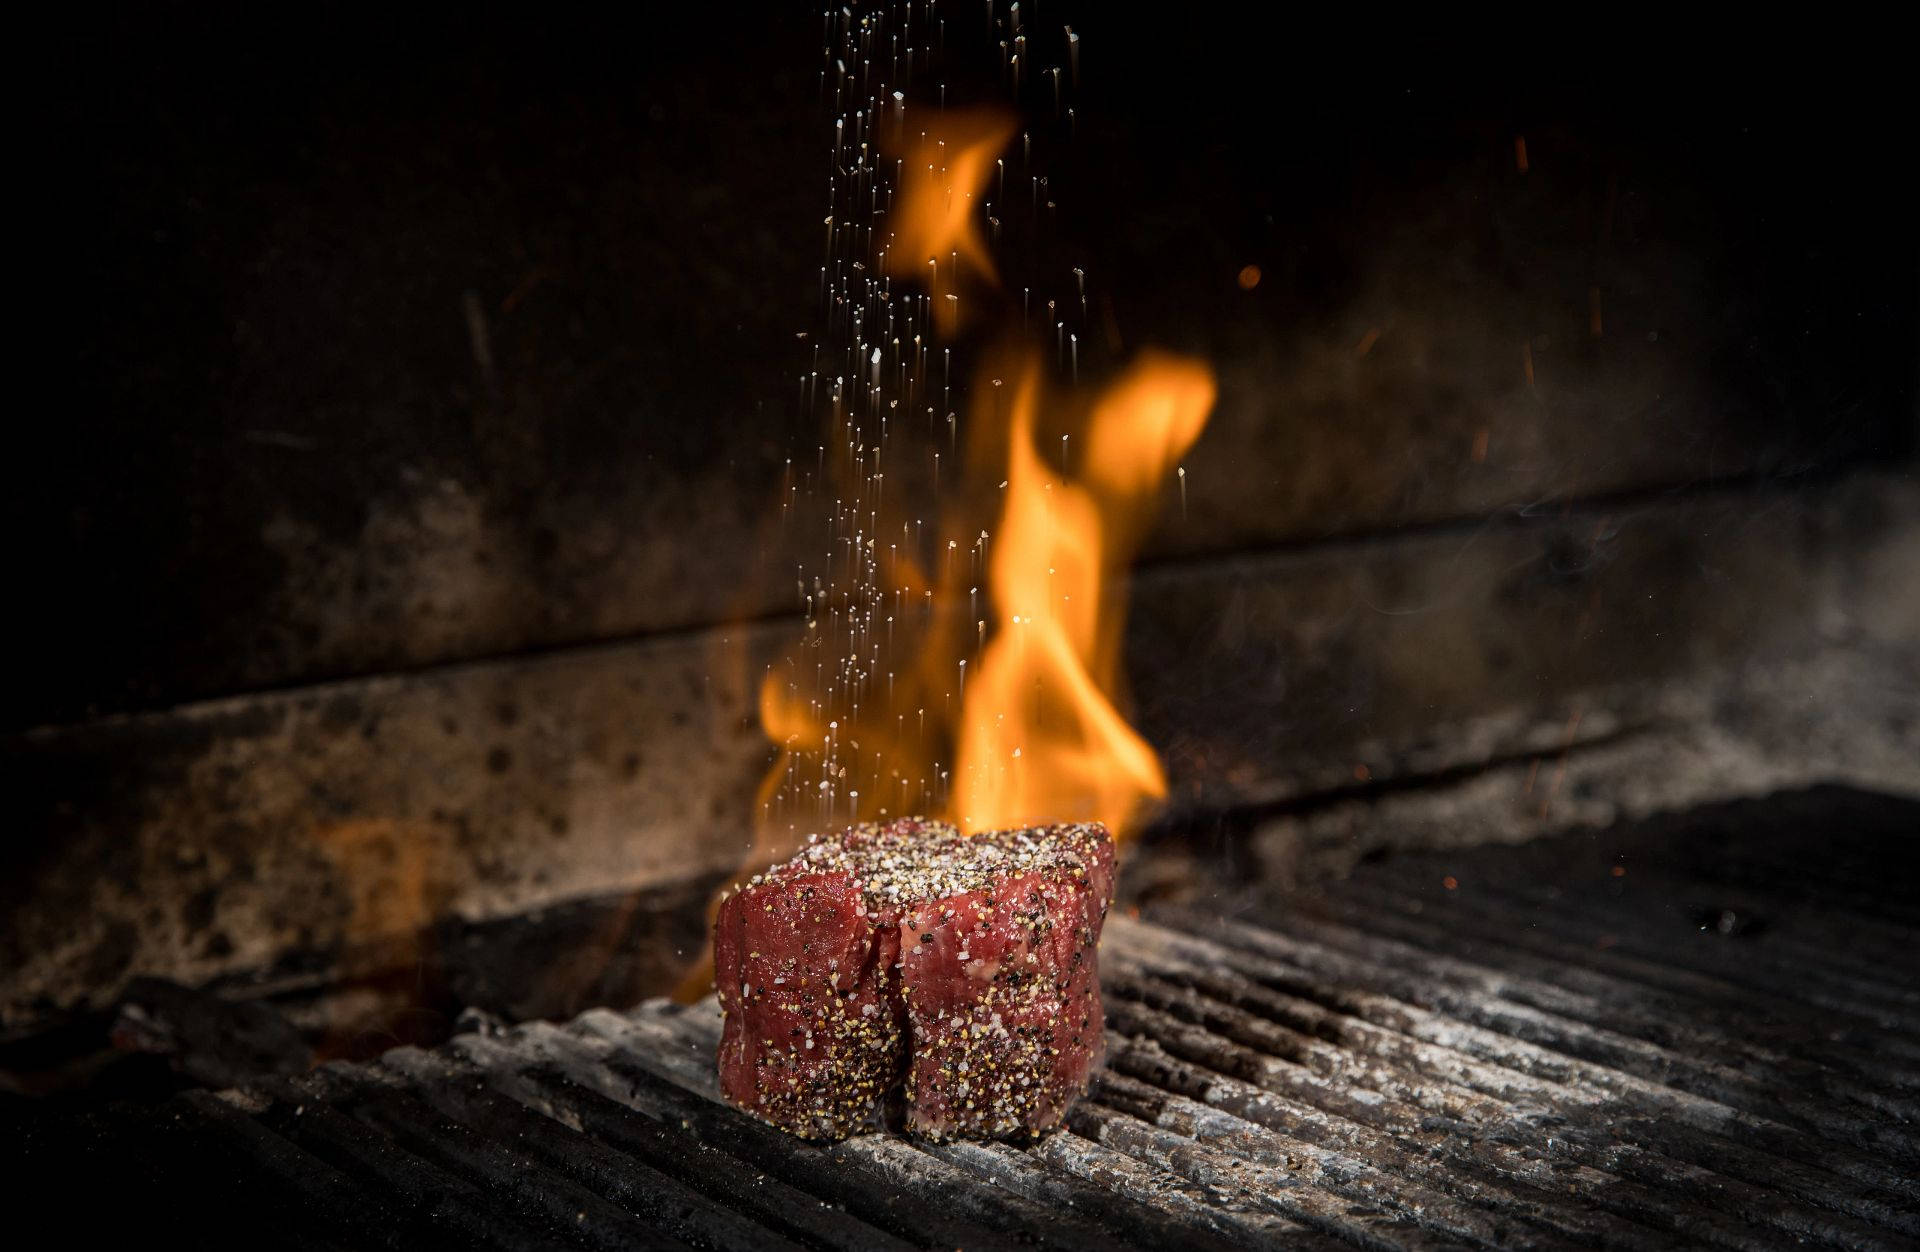 Sizzling Churrasco - Brazilian Barbecue on Flames Wallpaper